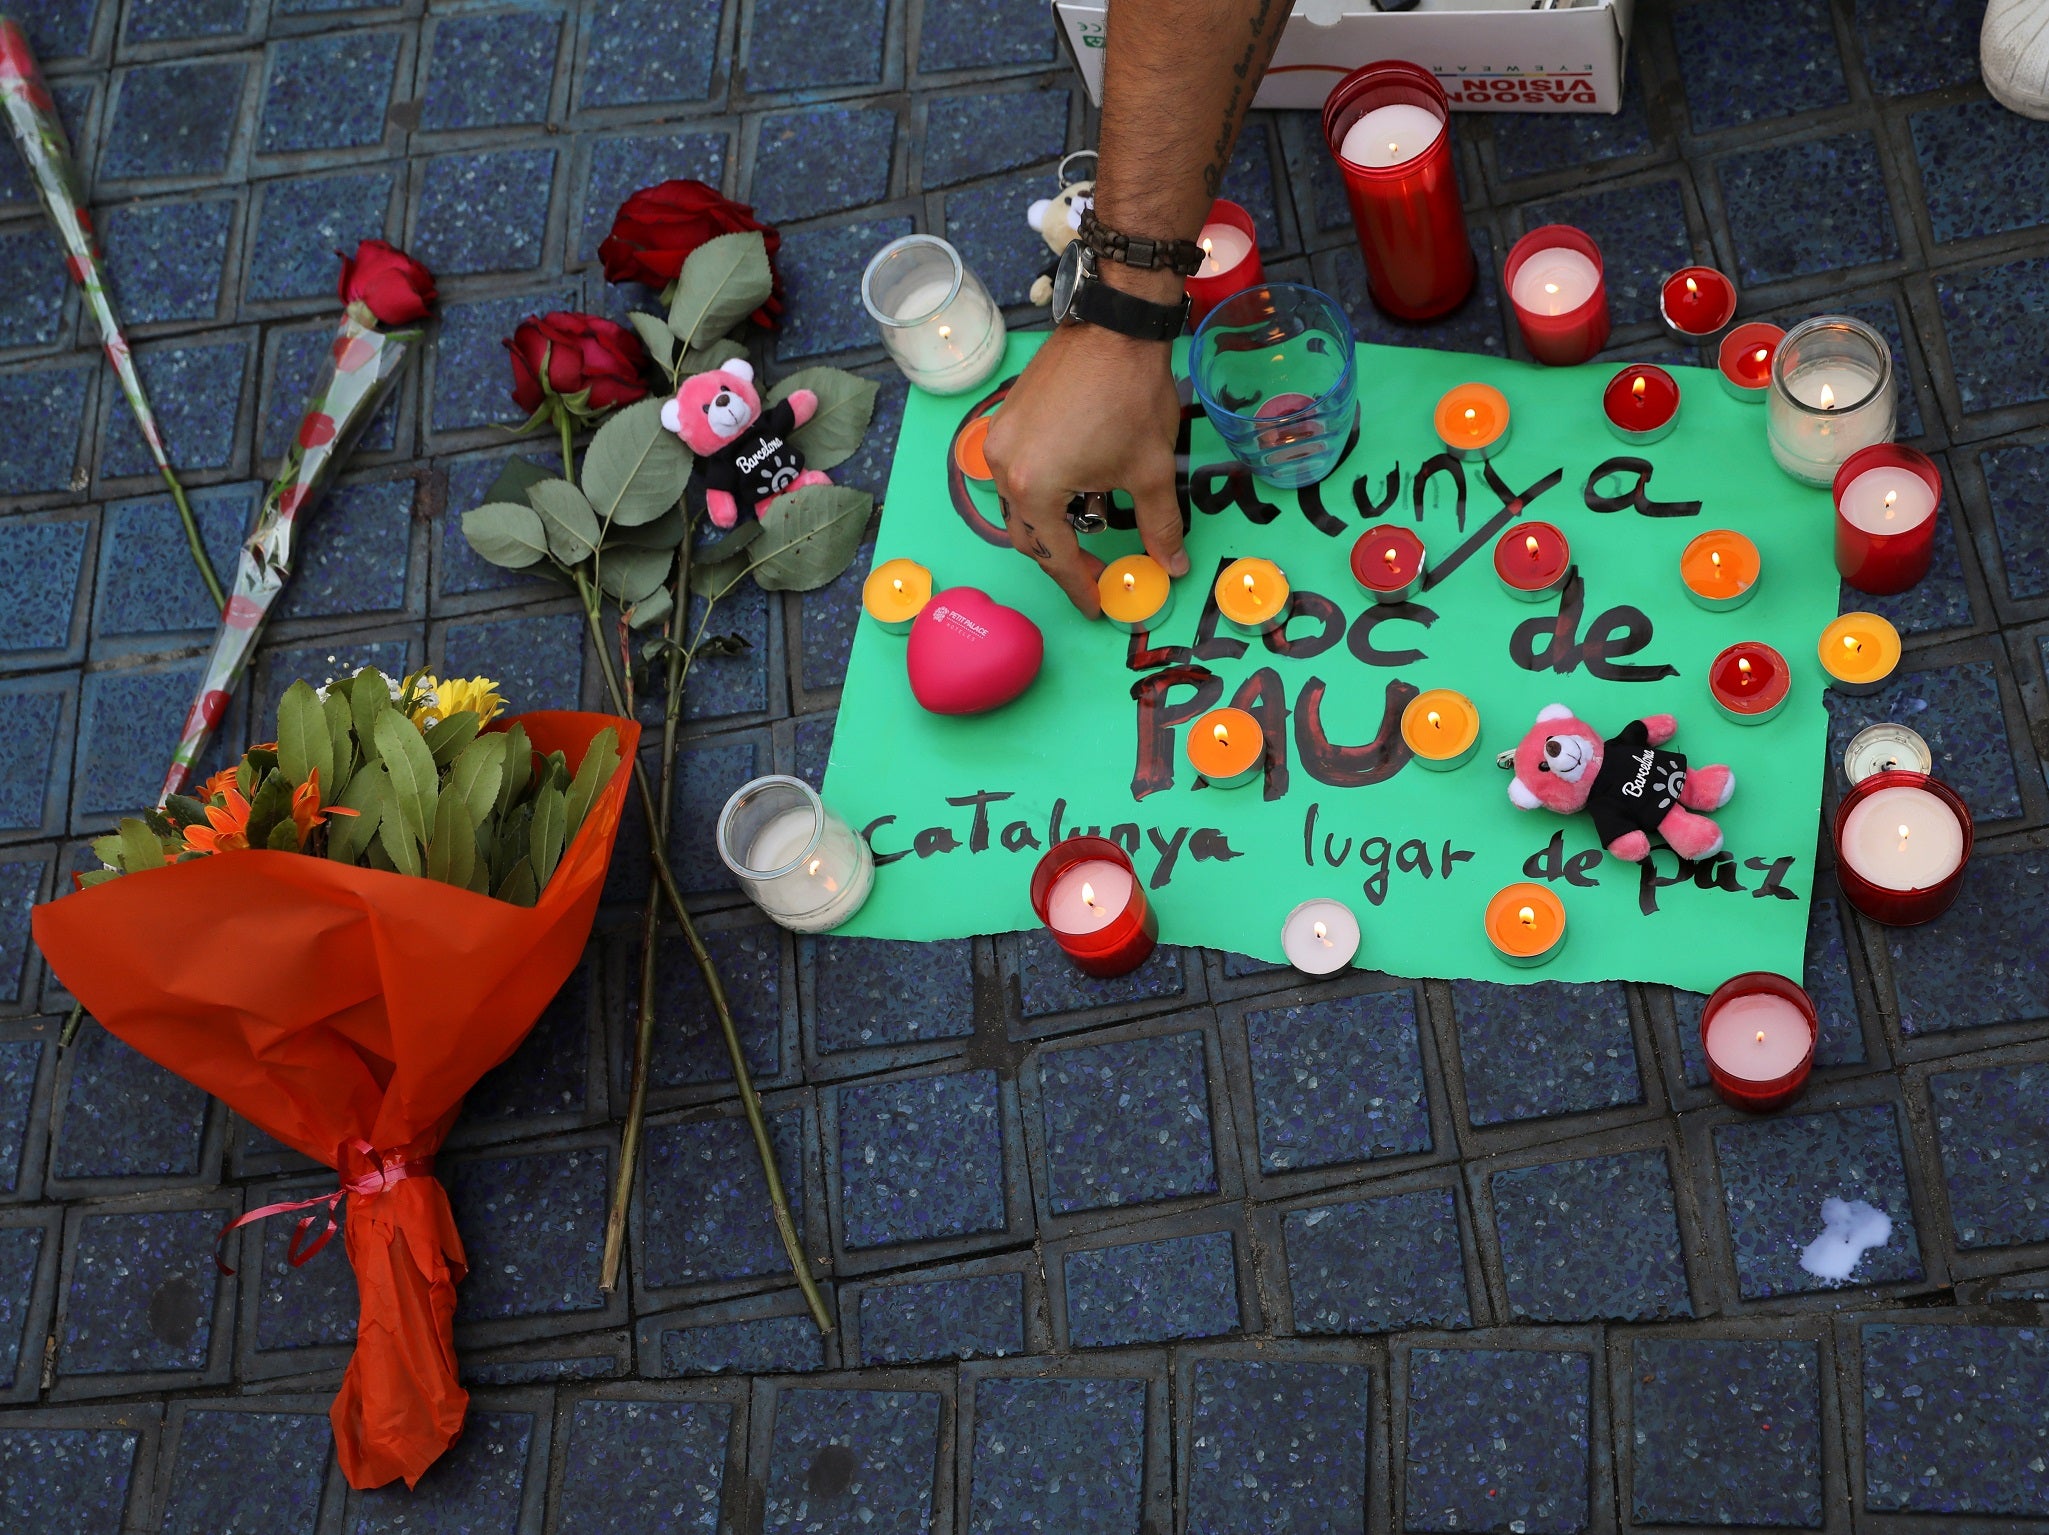 Memorials were placed at the scene where suspected terrorists crashed a van into pedestrians at Las Ramblas in Barcelona